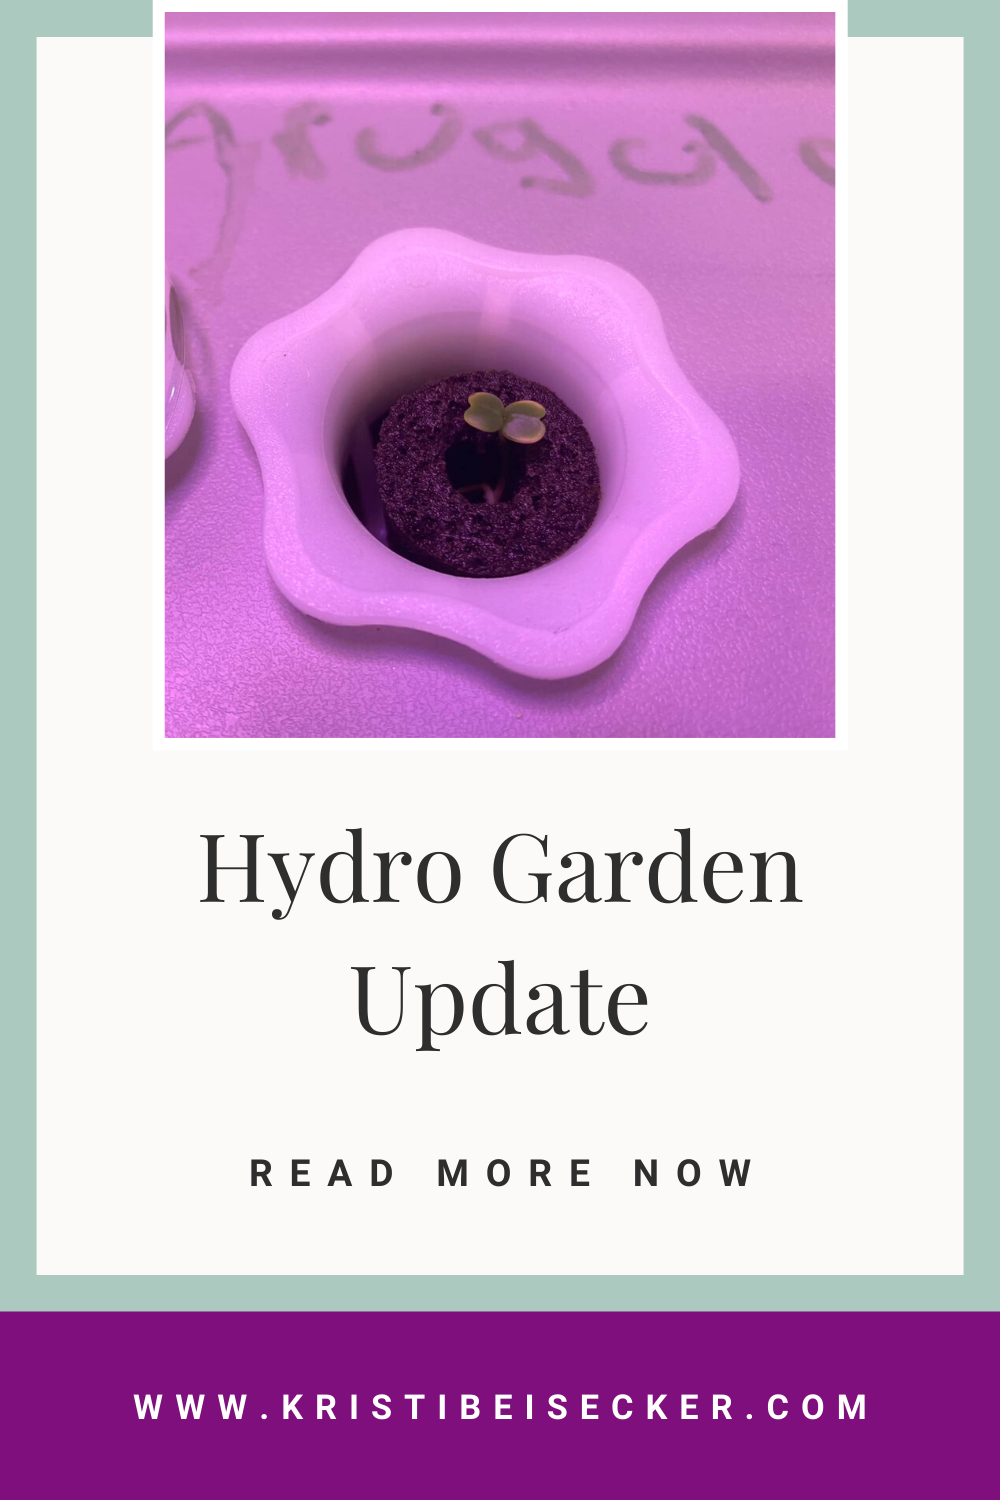 Project: Hydro Garden Update